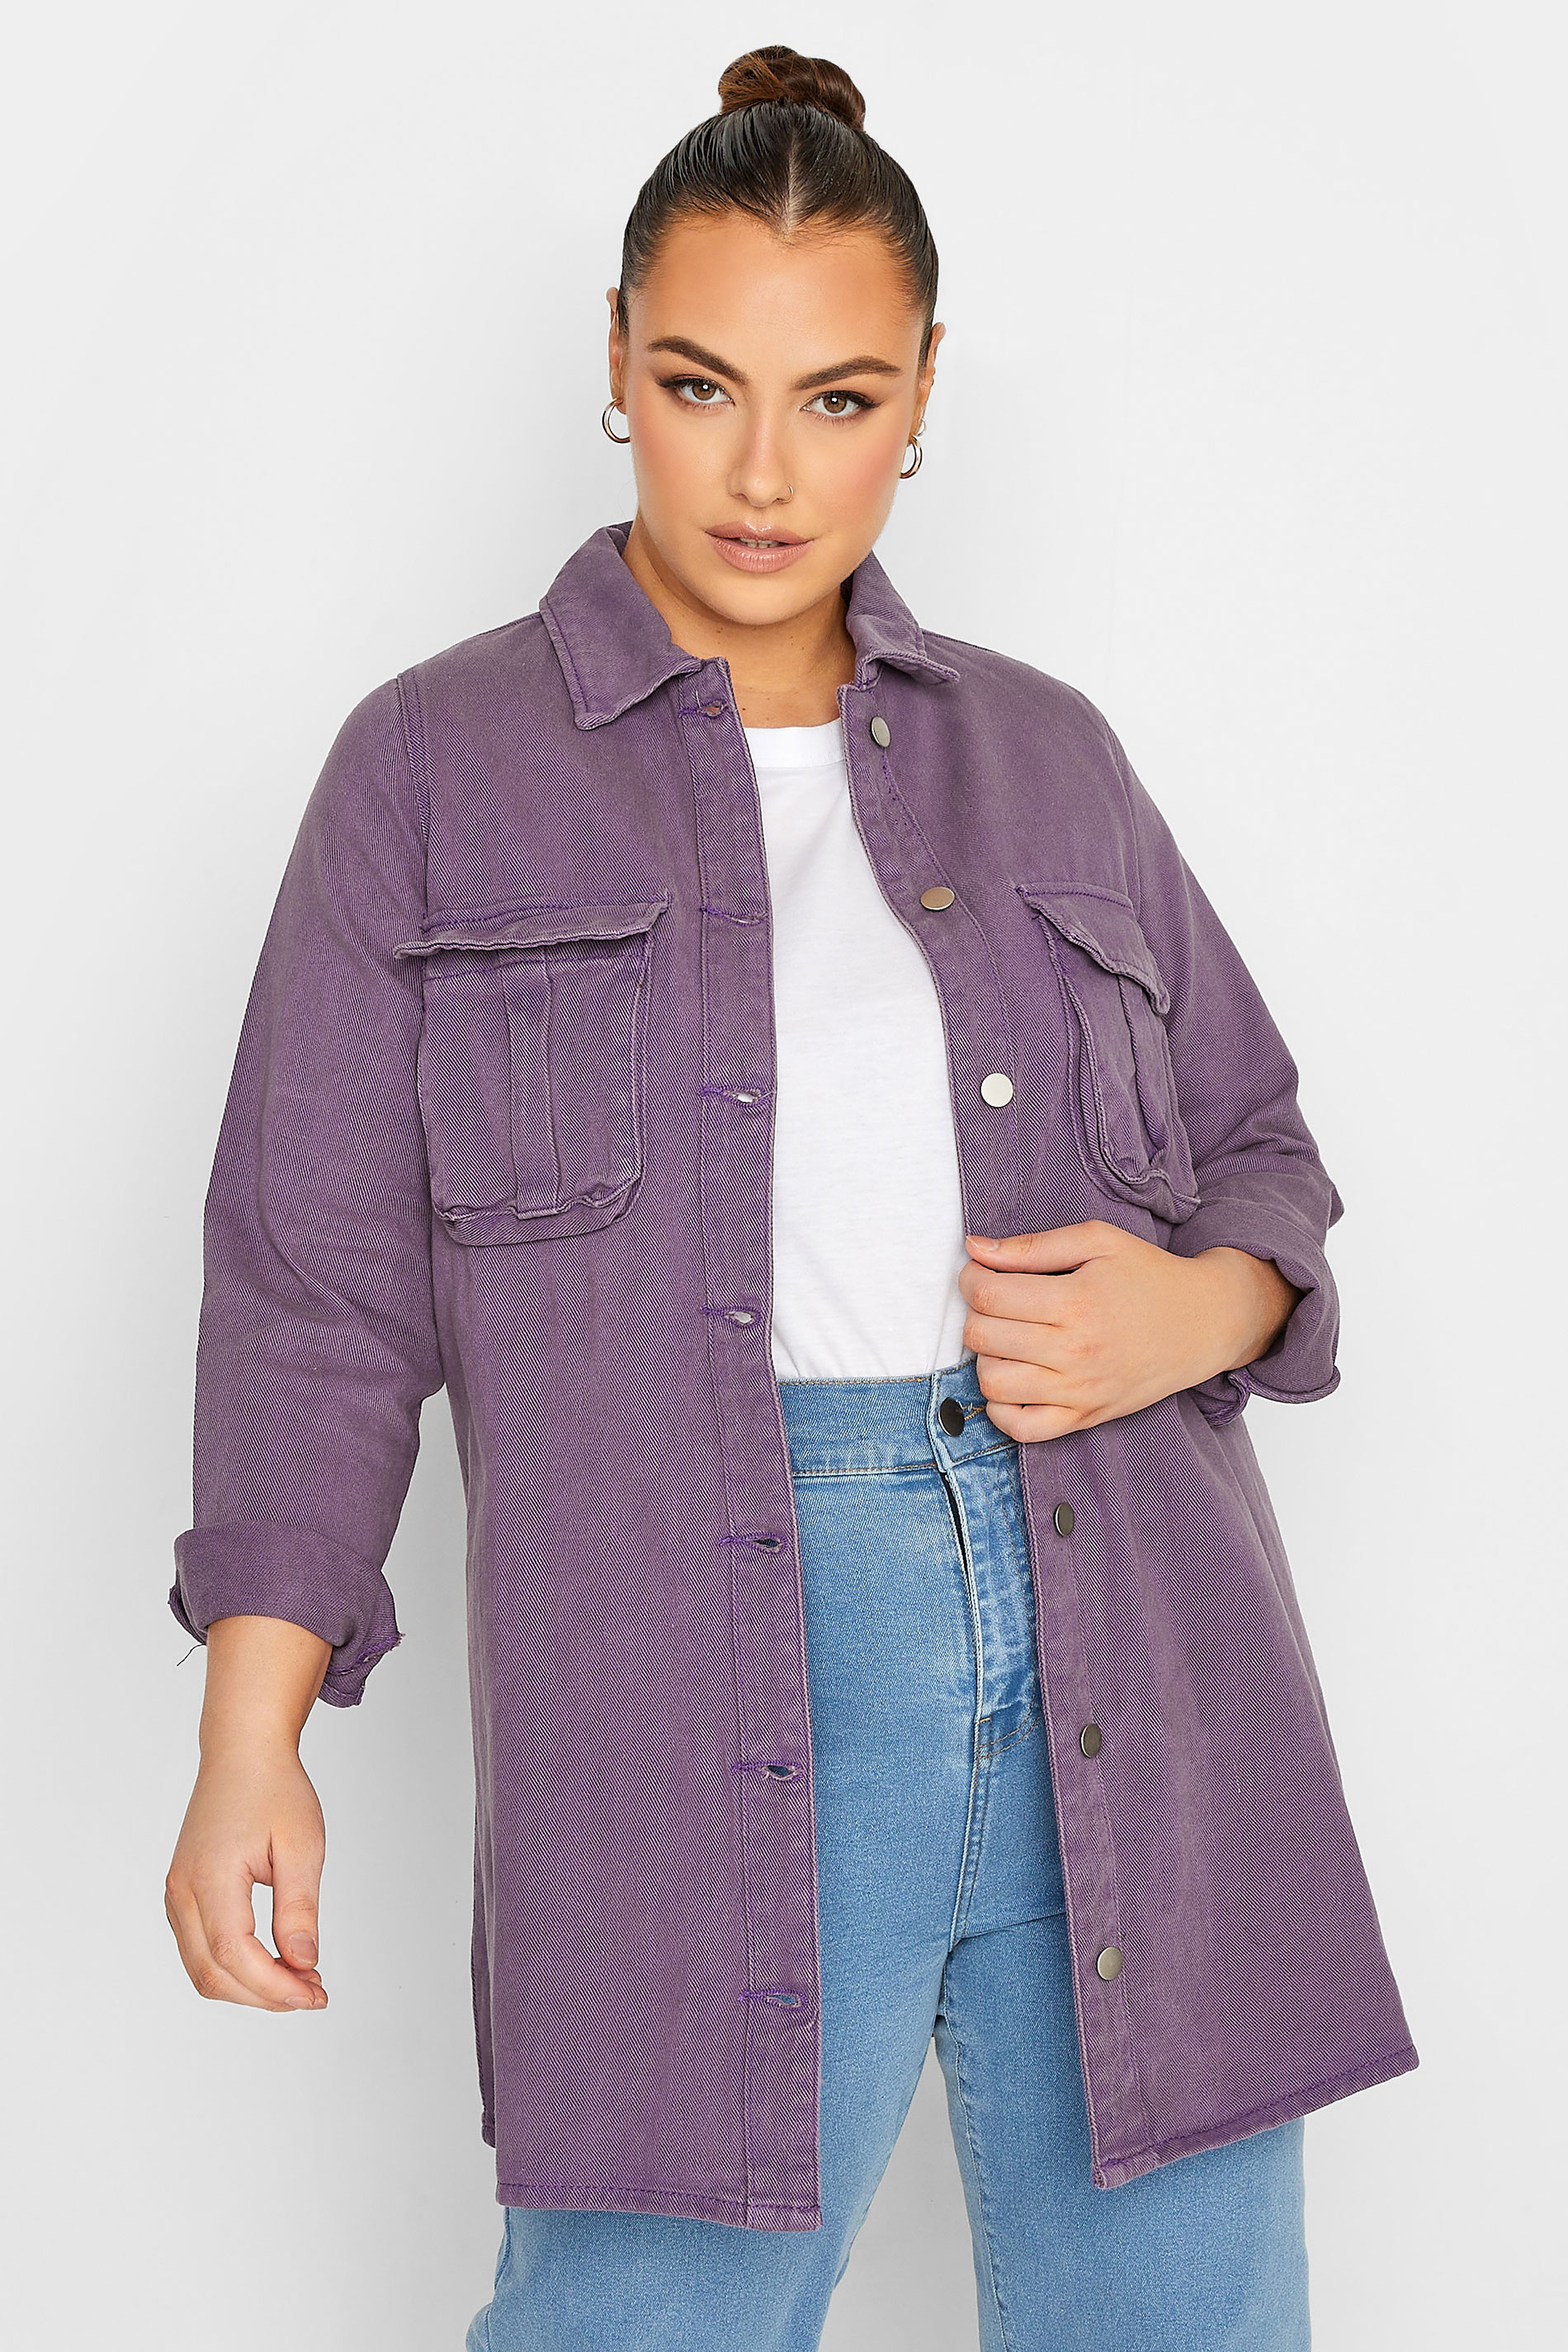 LIMITED COLLECTION Plus Size Purple Longline Denim Jacket | Yours Clothing 1